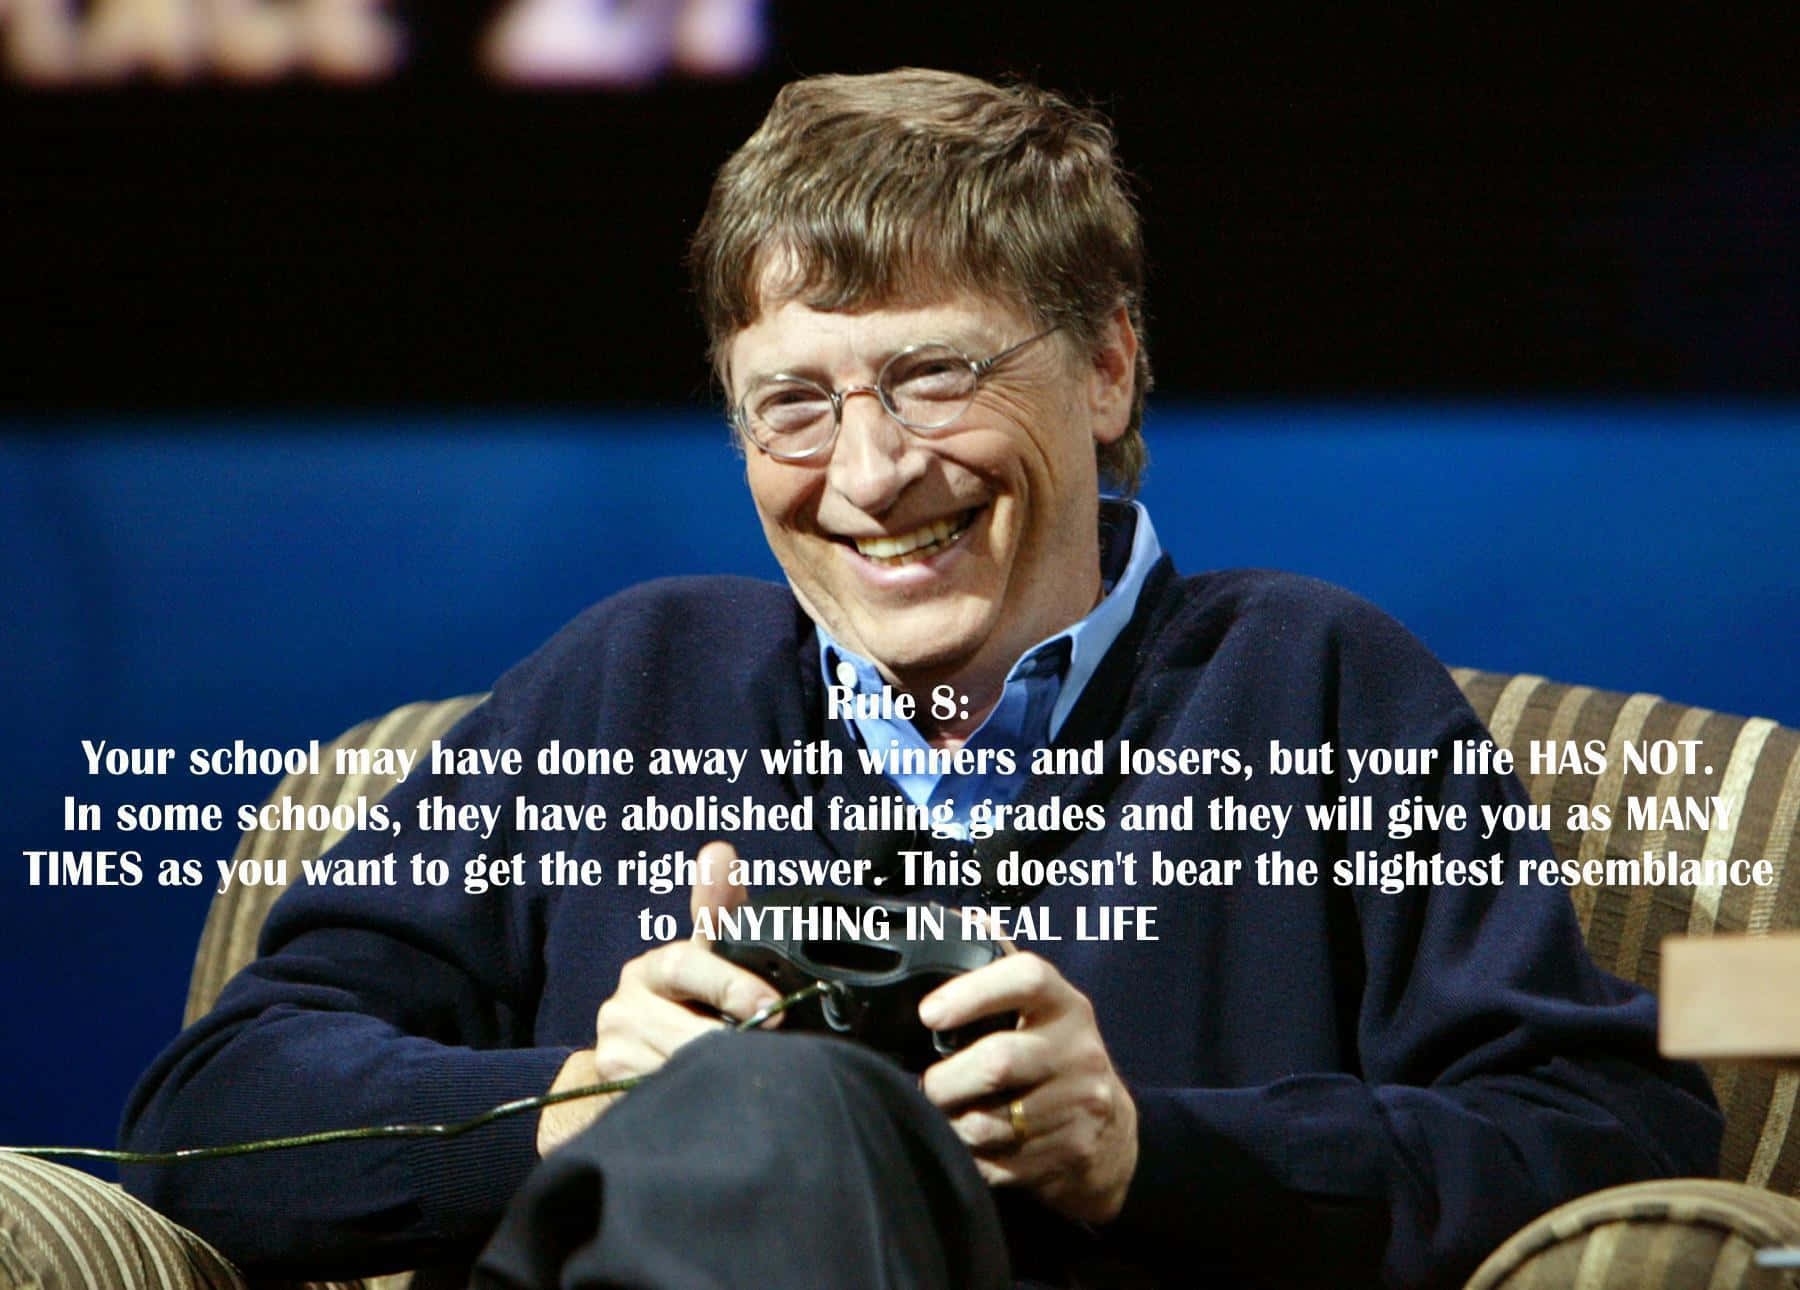 Microsoft Co-founder Bill Gates